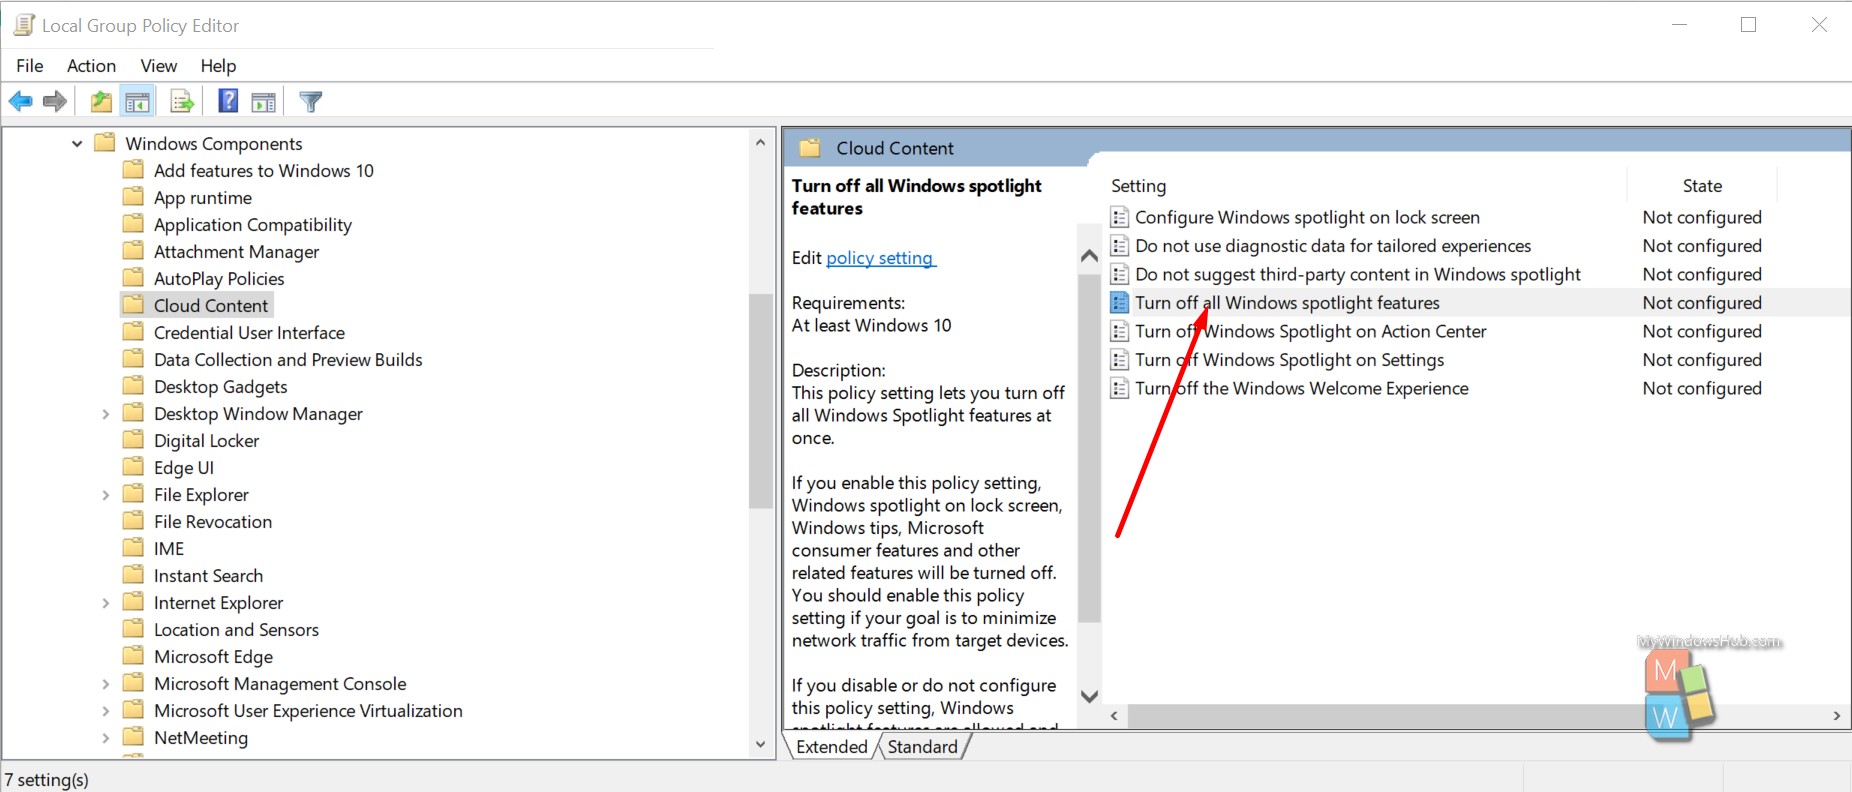 How To Turn On/Off Windows Spotlight Features on Windows 10?